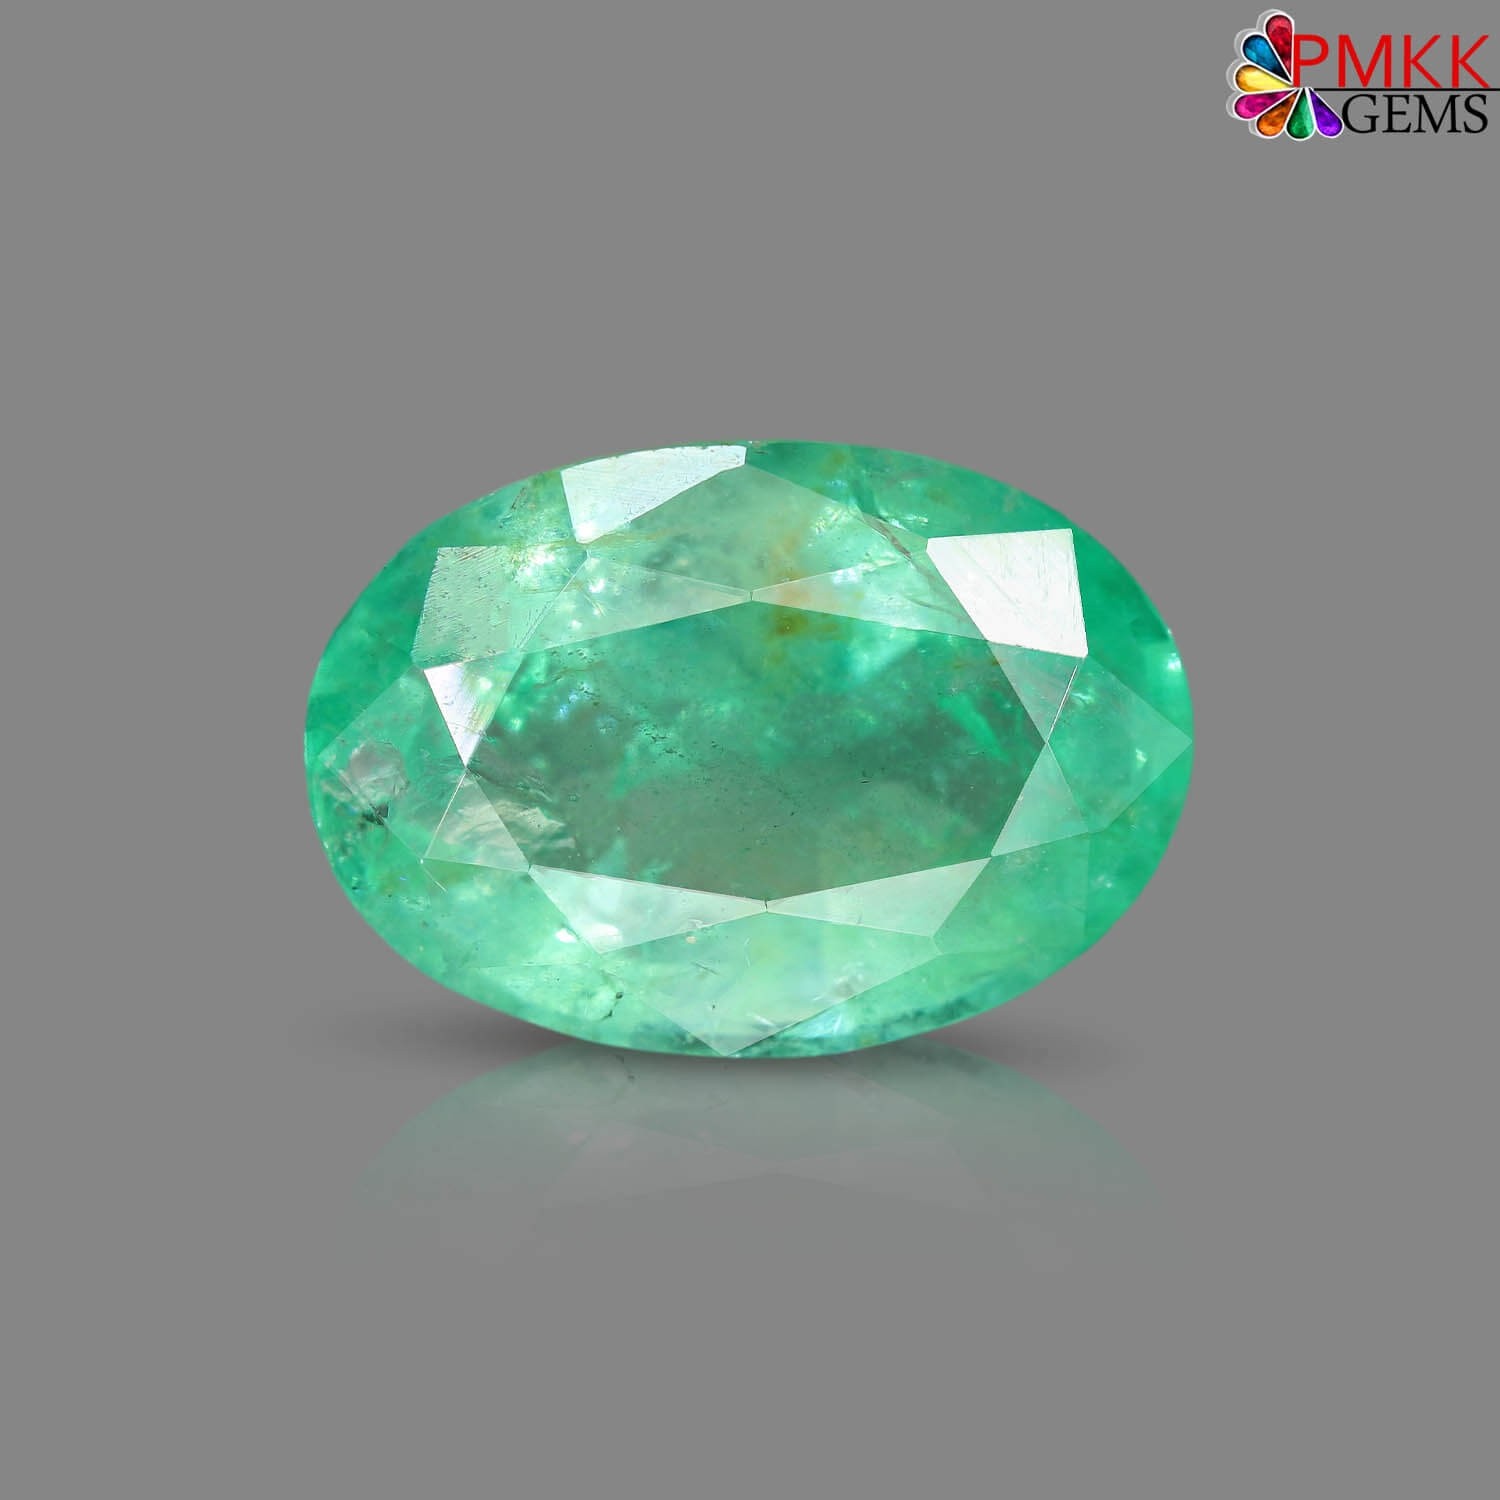 Colombian Emerald (Markat Stone) 2.22 Carats